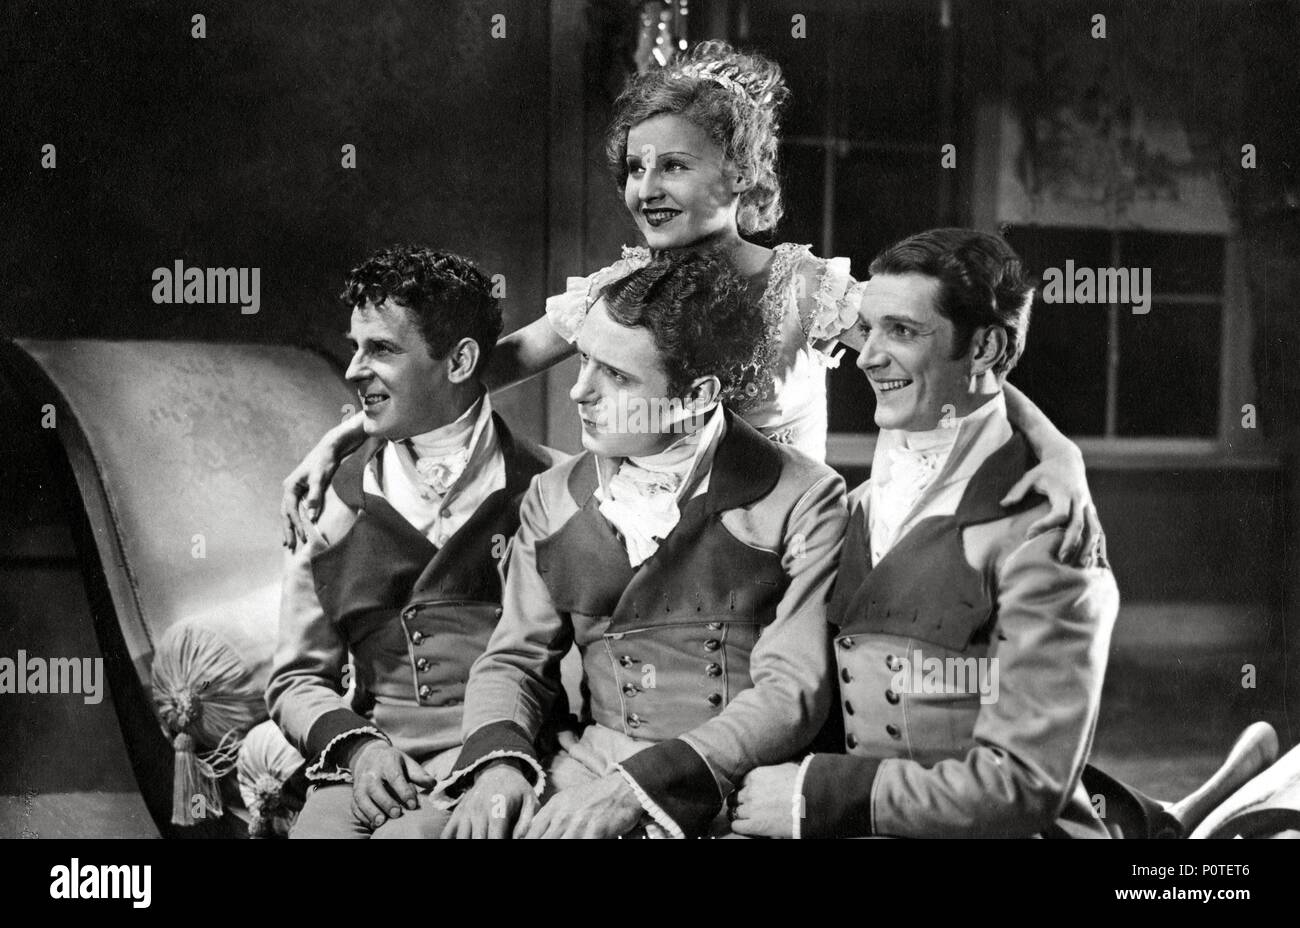 Original Film Title: KONGRESS TANZT, DER.  English Title: CONGRESS DANCES.  Film Director: ERIK CHARELL.  Year: 1931.  Stars: LILIAN HARVEY; REGINALD PURDELL; KARL HEINZ SCHROTH; ROBERT ARNOUX. Credit: U.F.A / Album Stock Photo